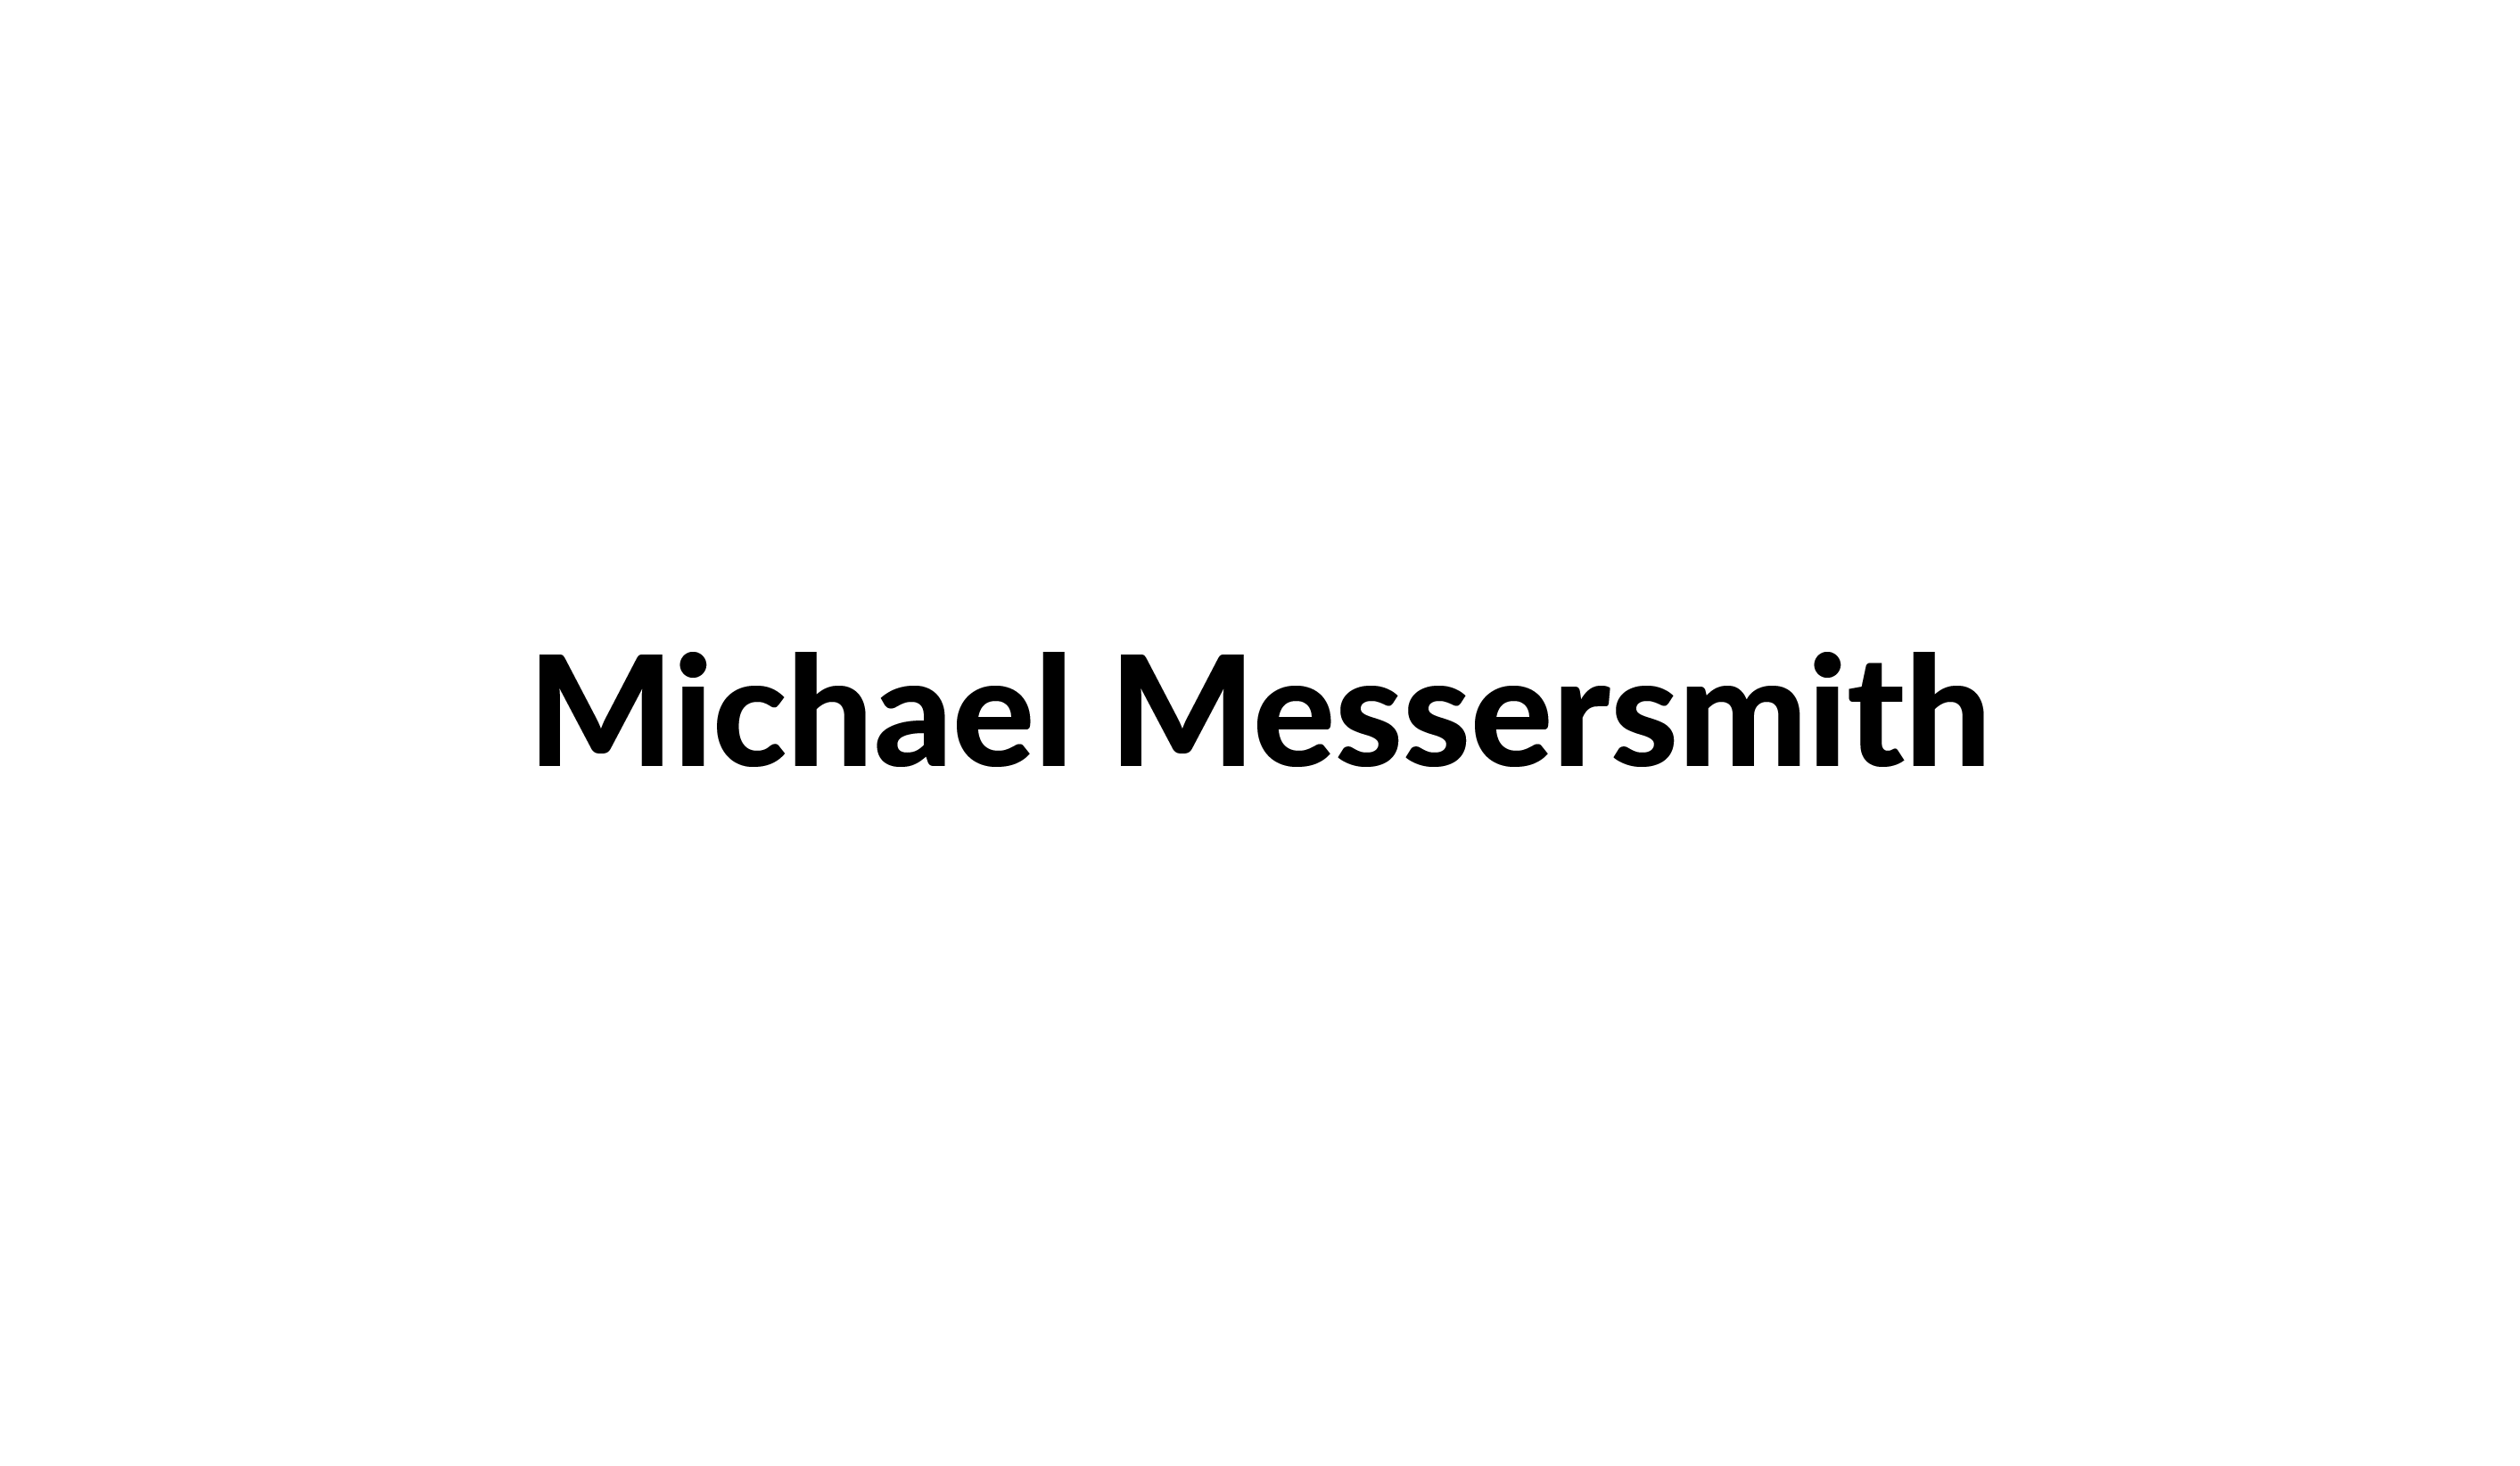 Michael Messersmith